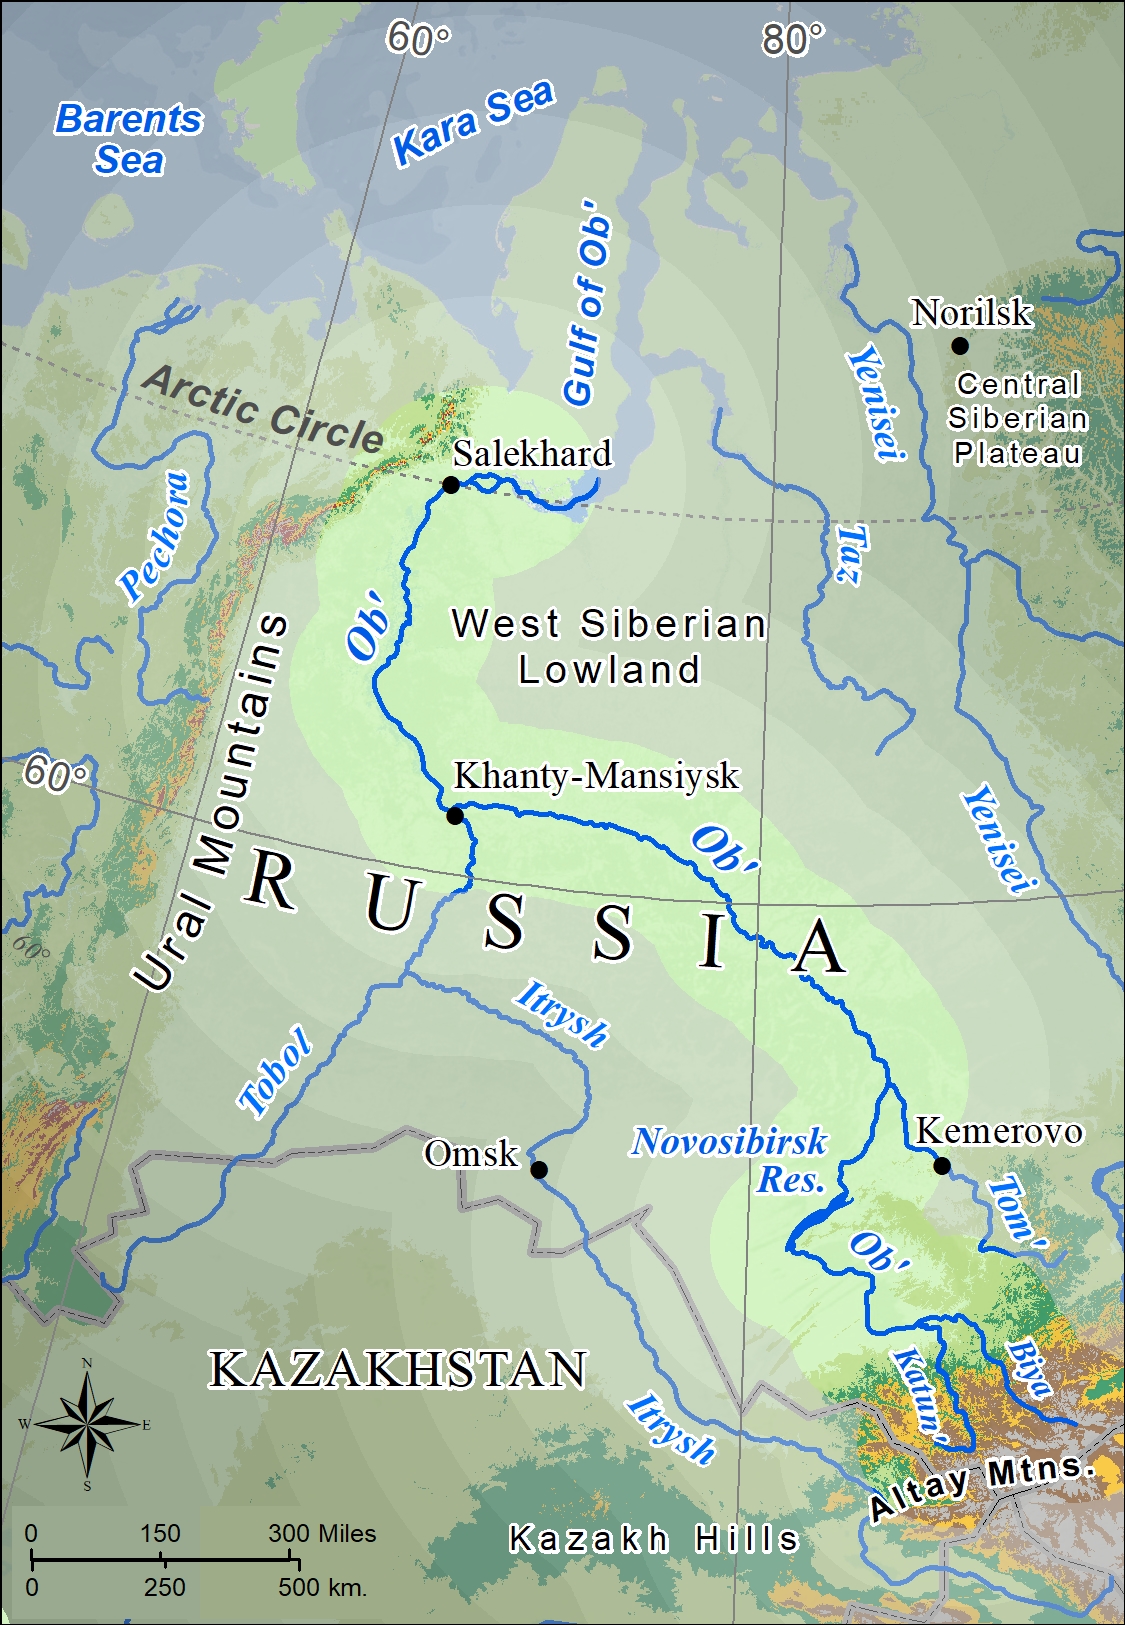 west siberian plain in russia